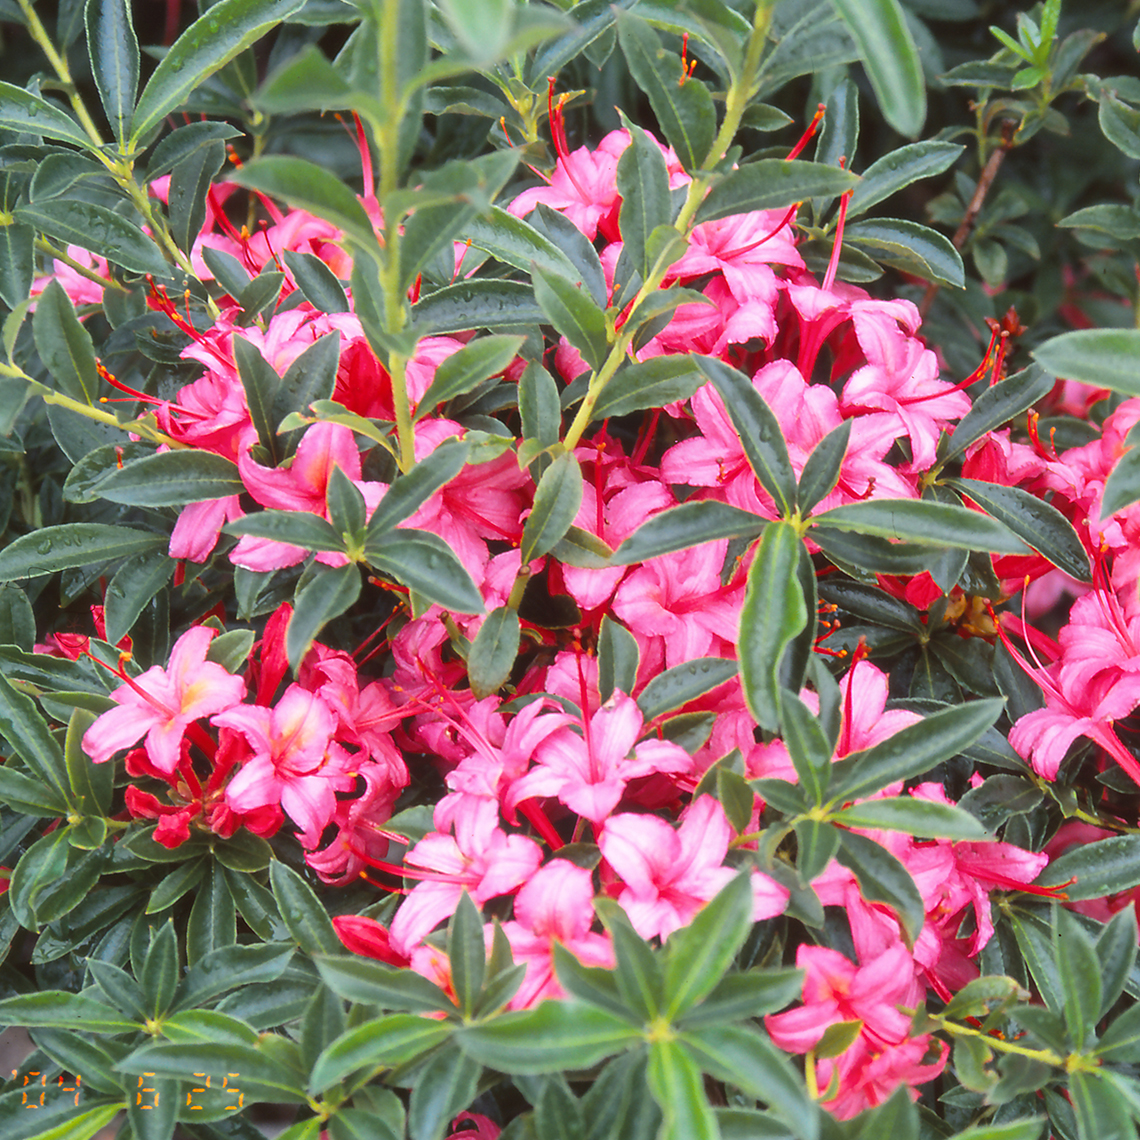 Bright pink Weston's Parade azalea blooms with magenta accents